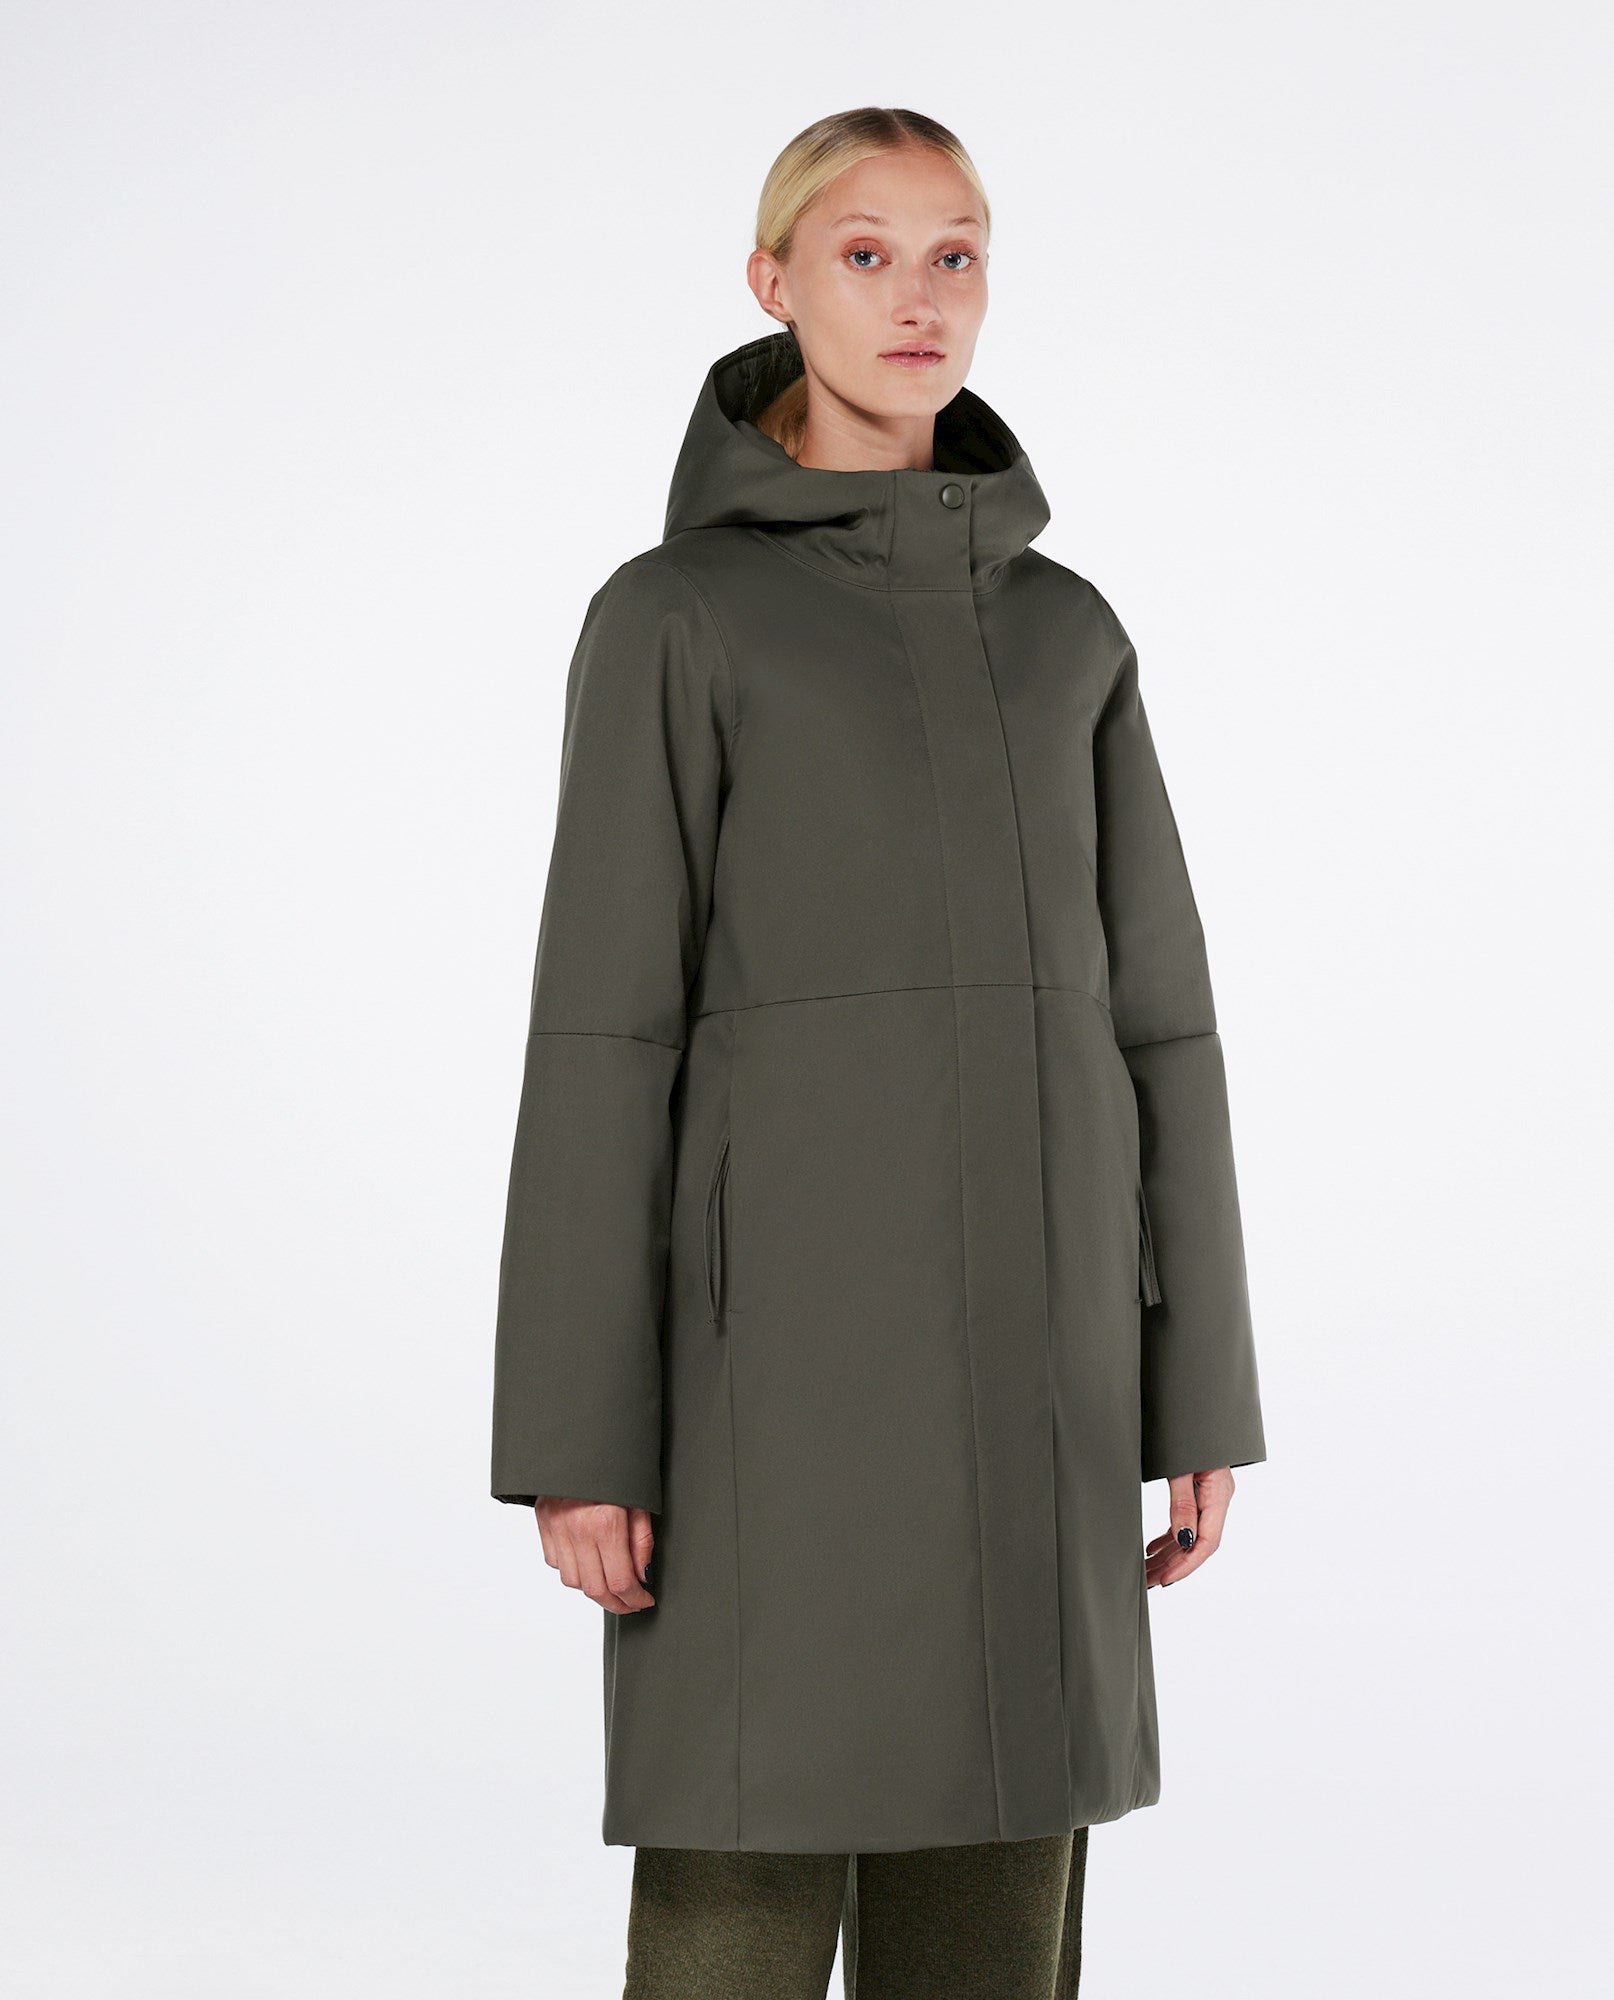 Elvine dark green winter coat | Elvira - Castor Green | ANTRACITE.COM